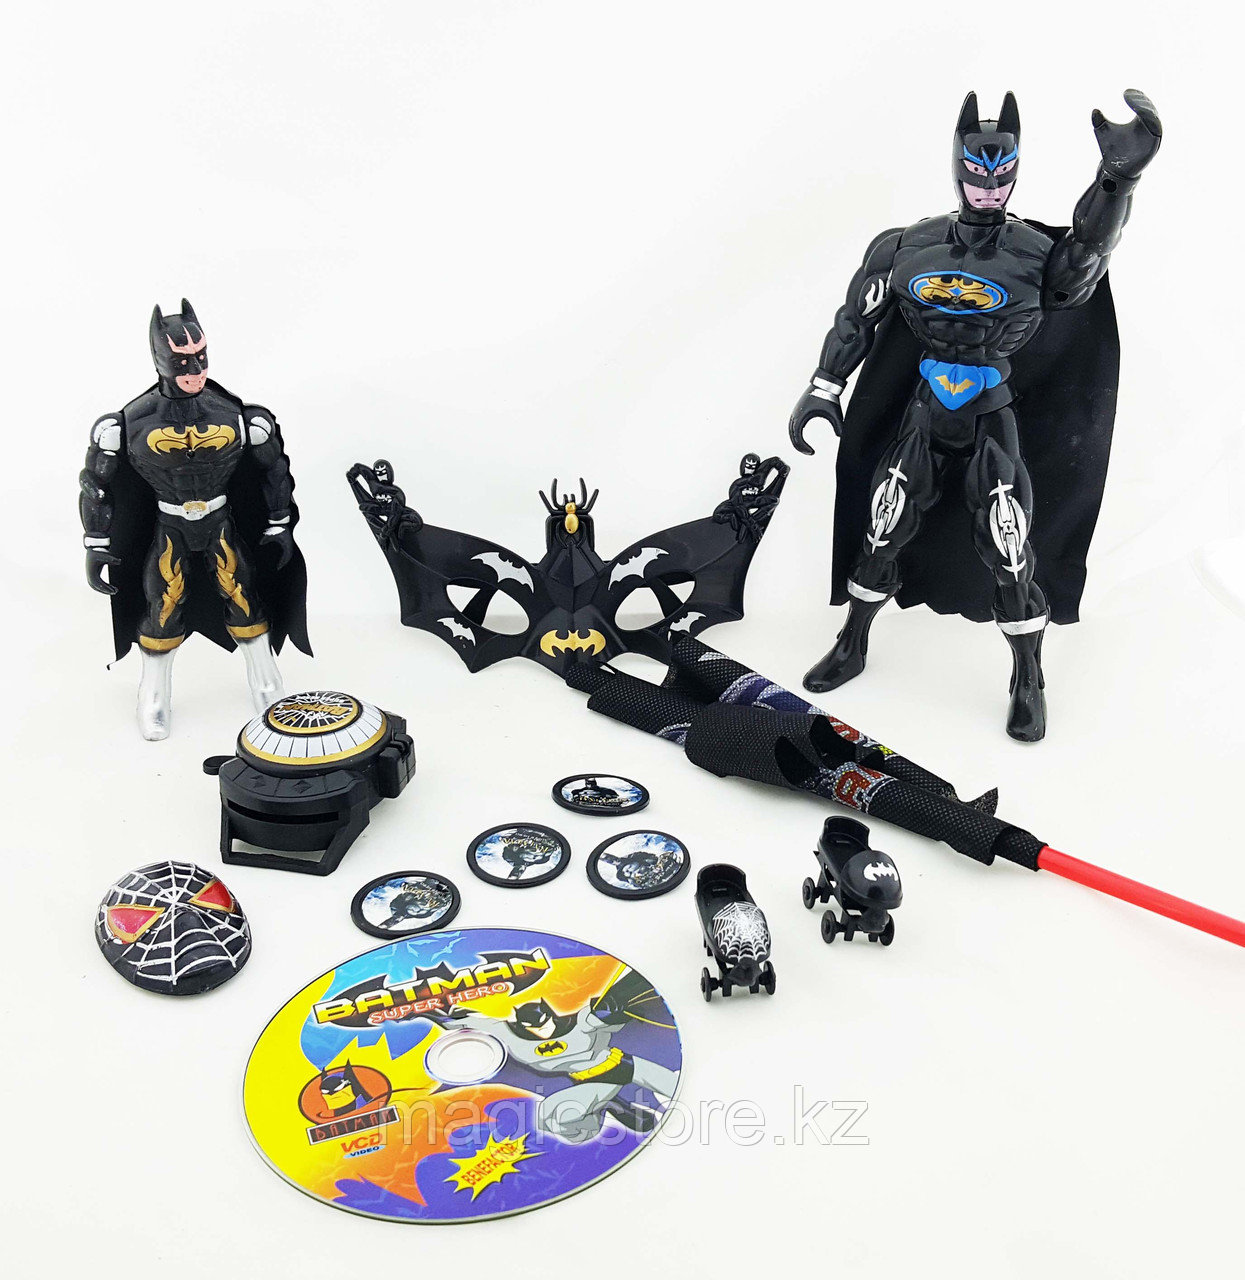 Batman Fighter Warrior 1034D Бэтмен Игровой набор